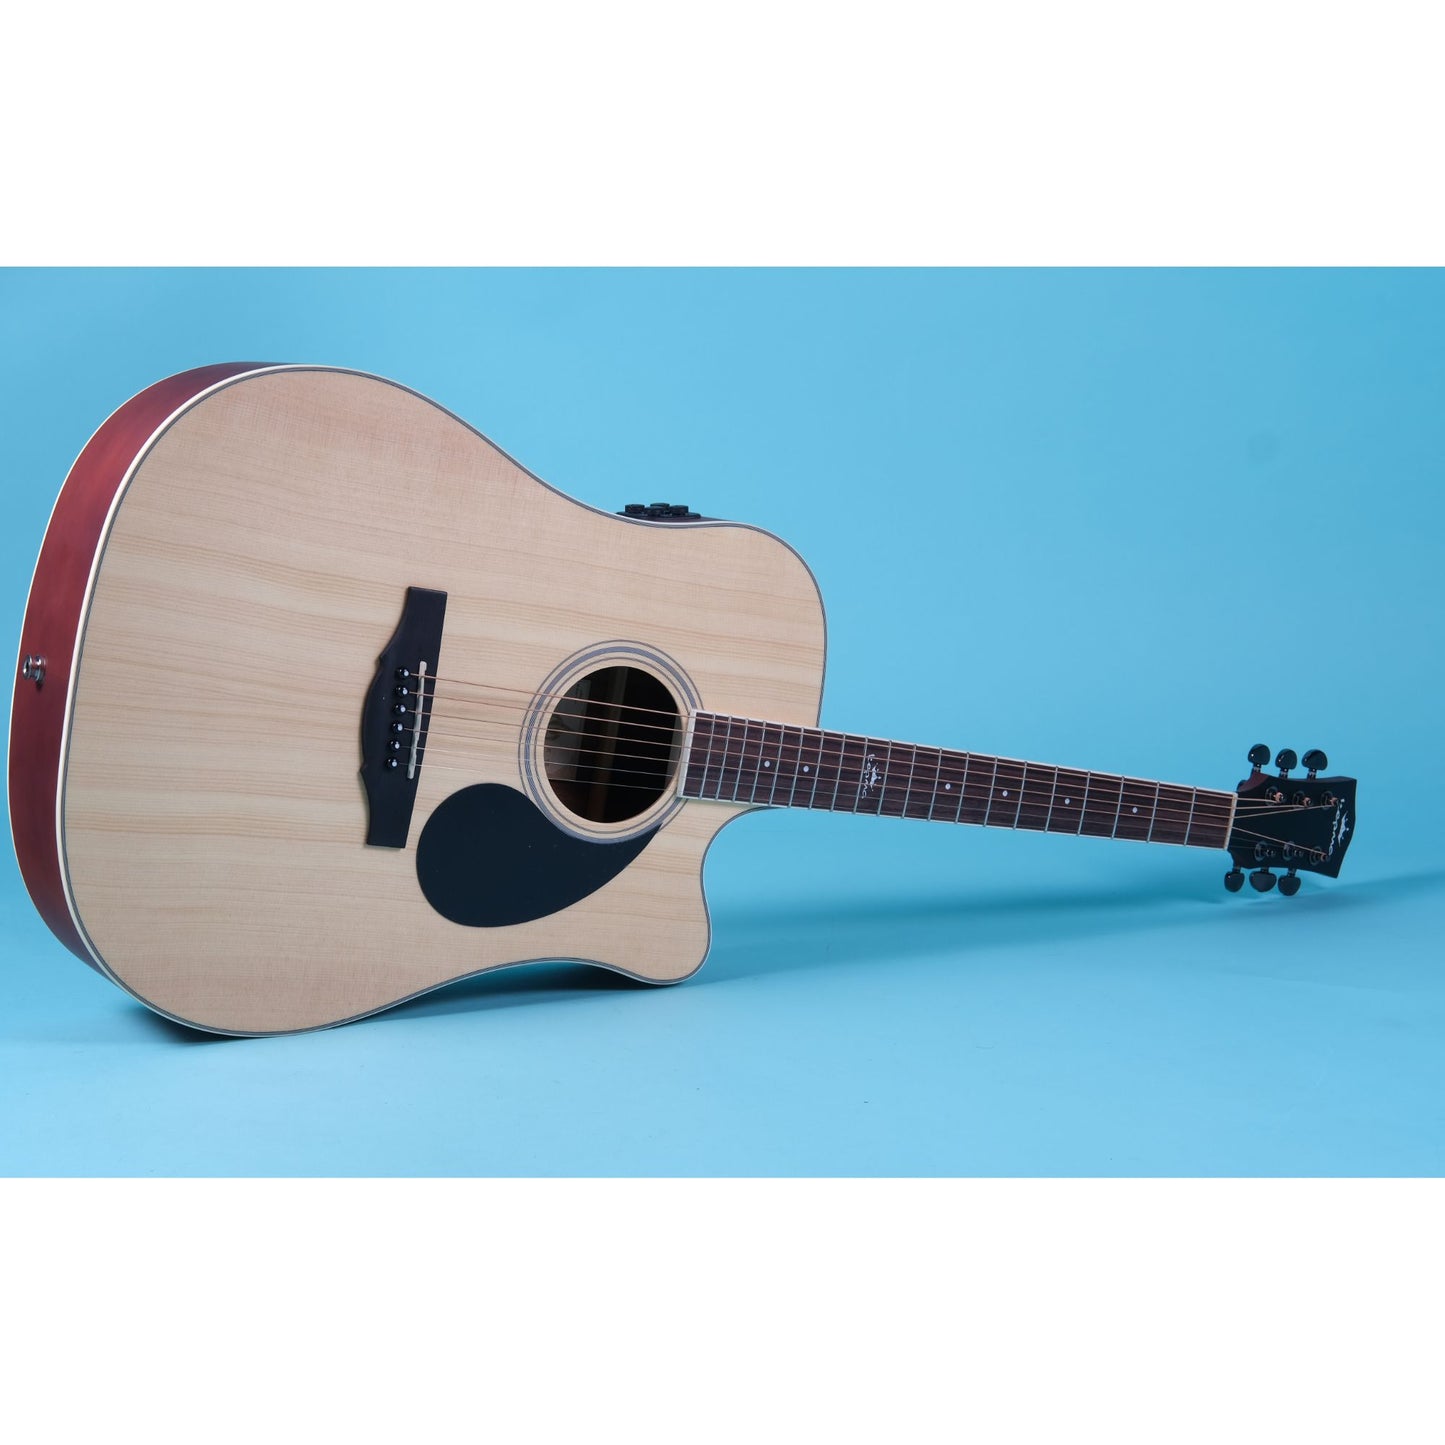 Kepma D1CE TRANS K10- Semi acoustic Guitar- Natural Matt